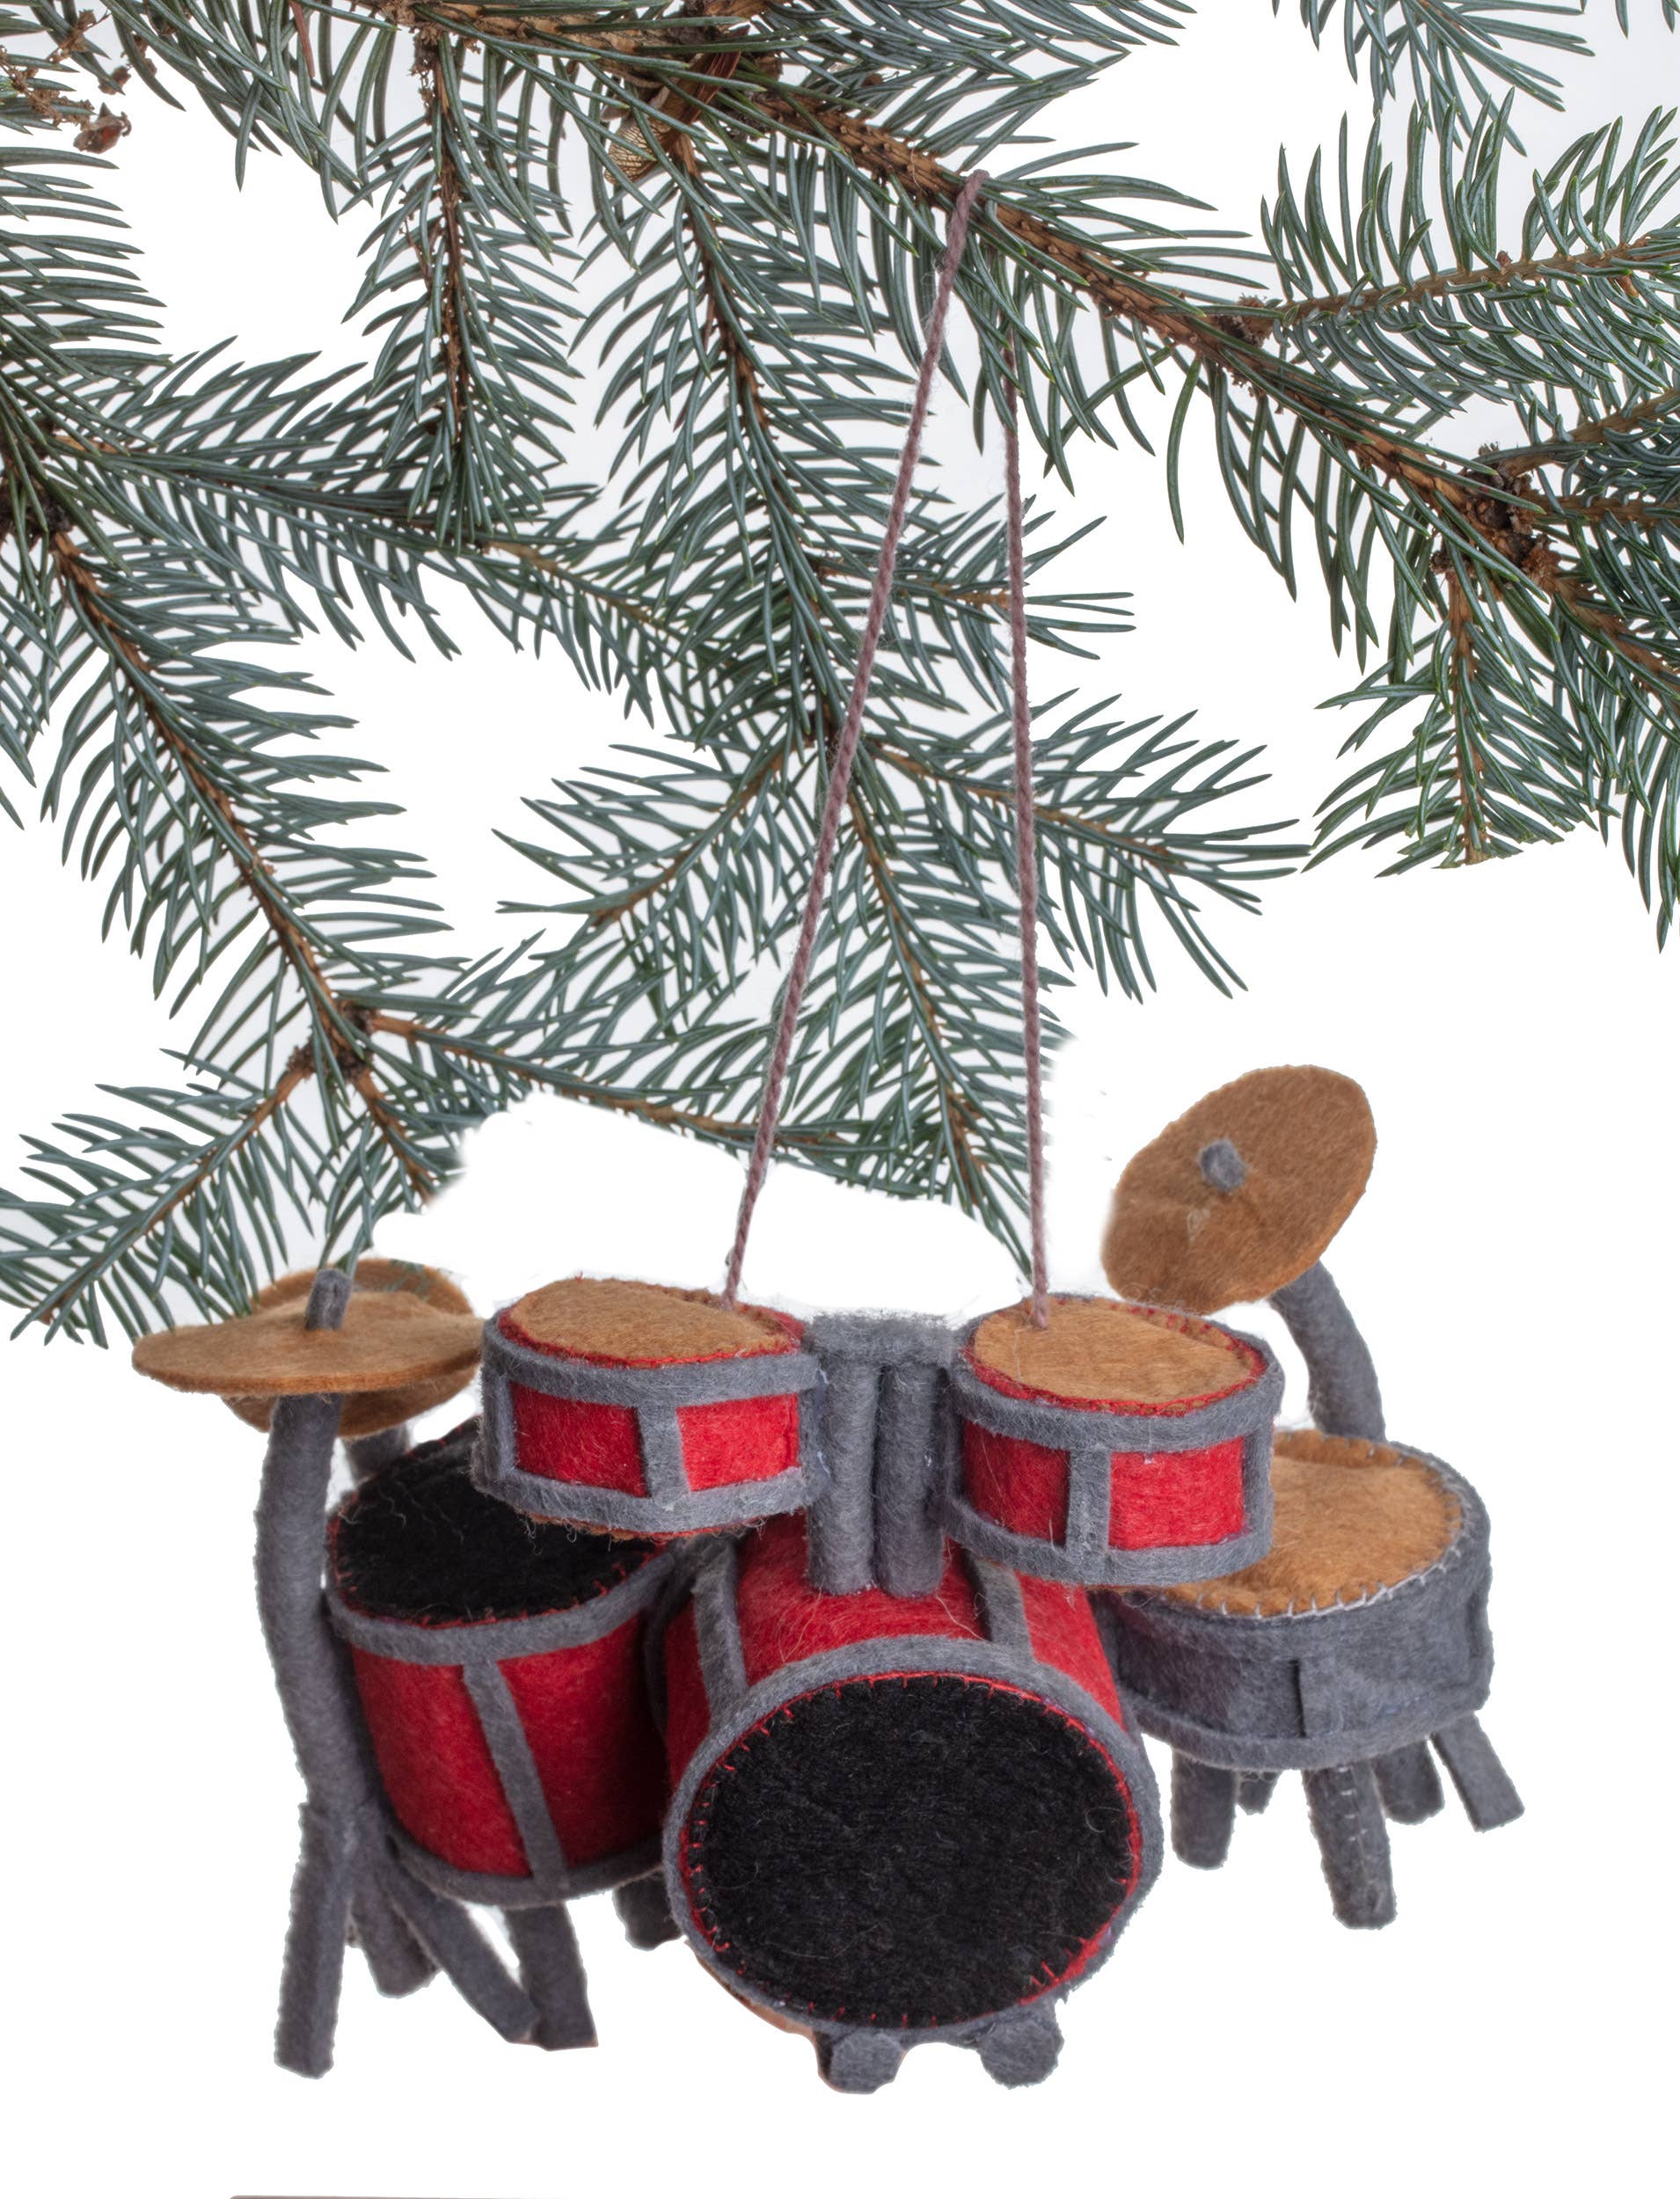 Drum Set Ornament